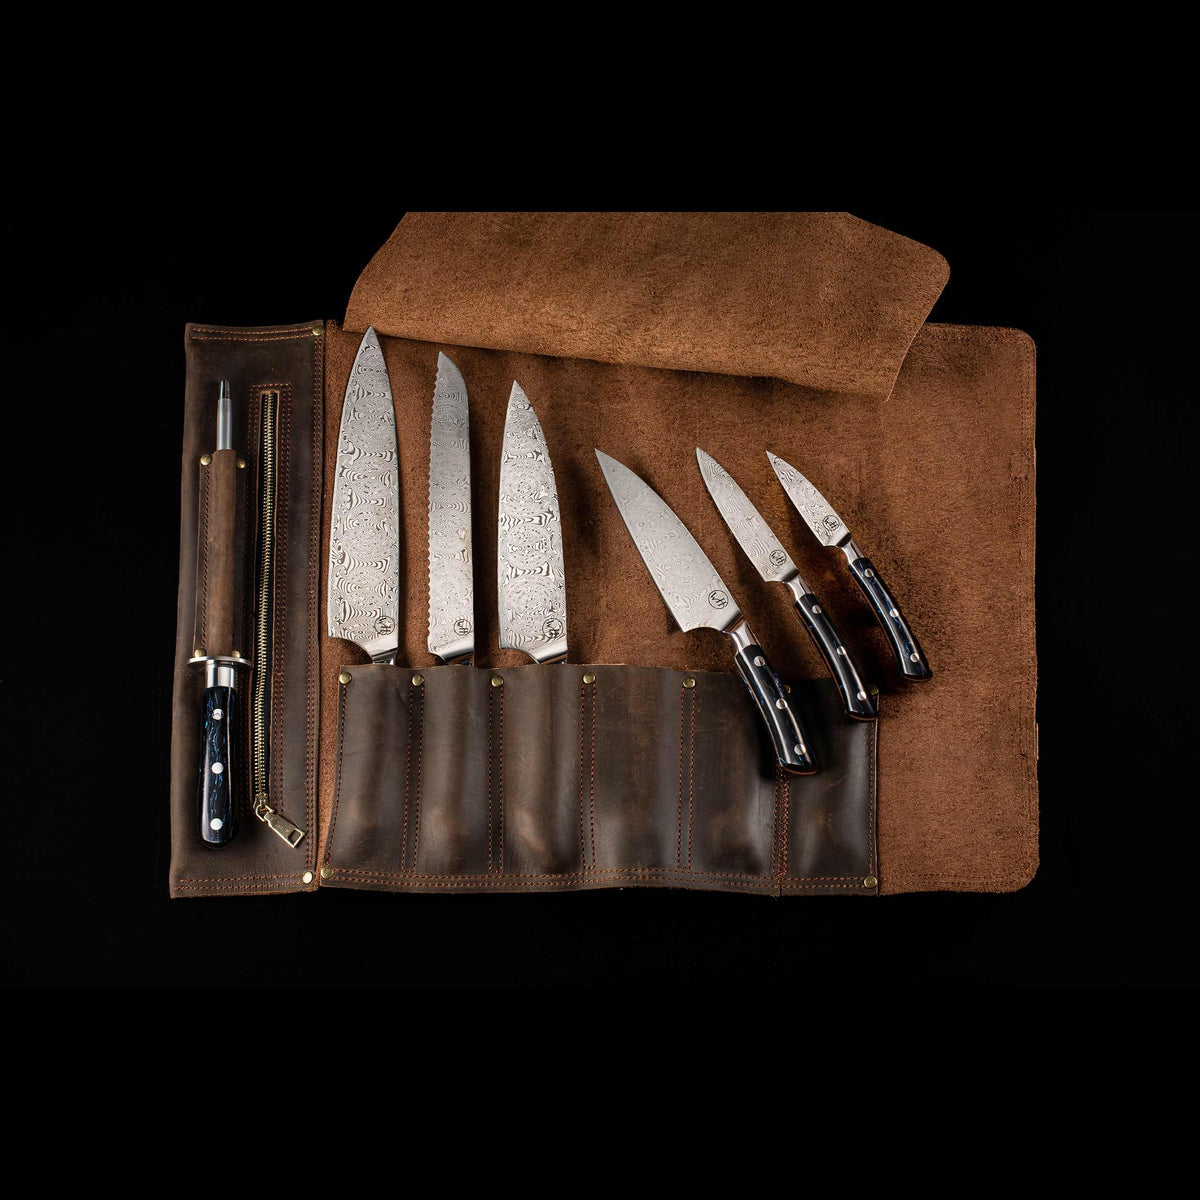 Kultro Pro Chef Knives (K19)